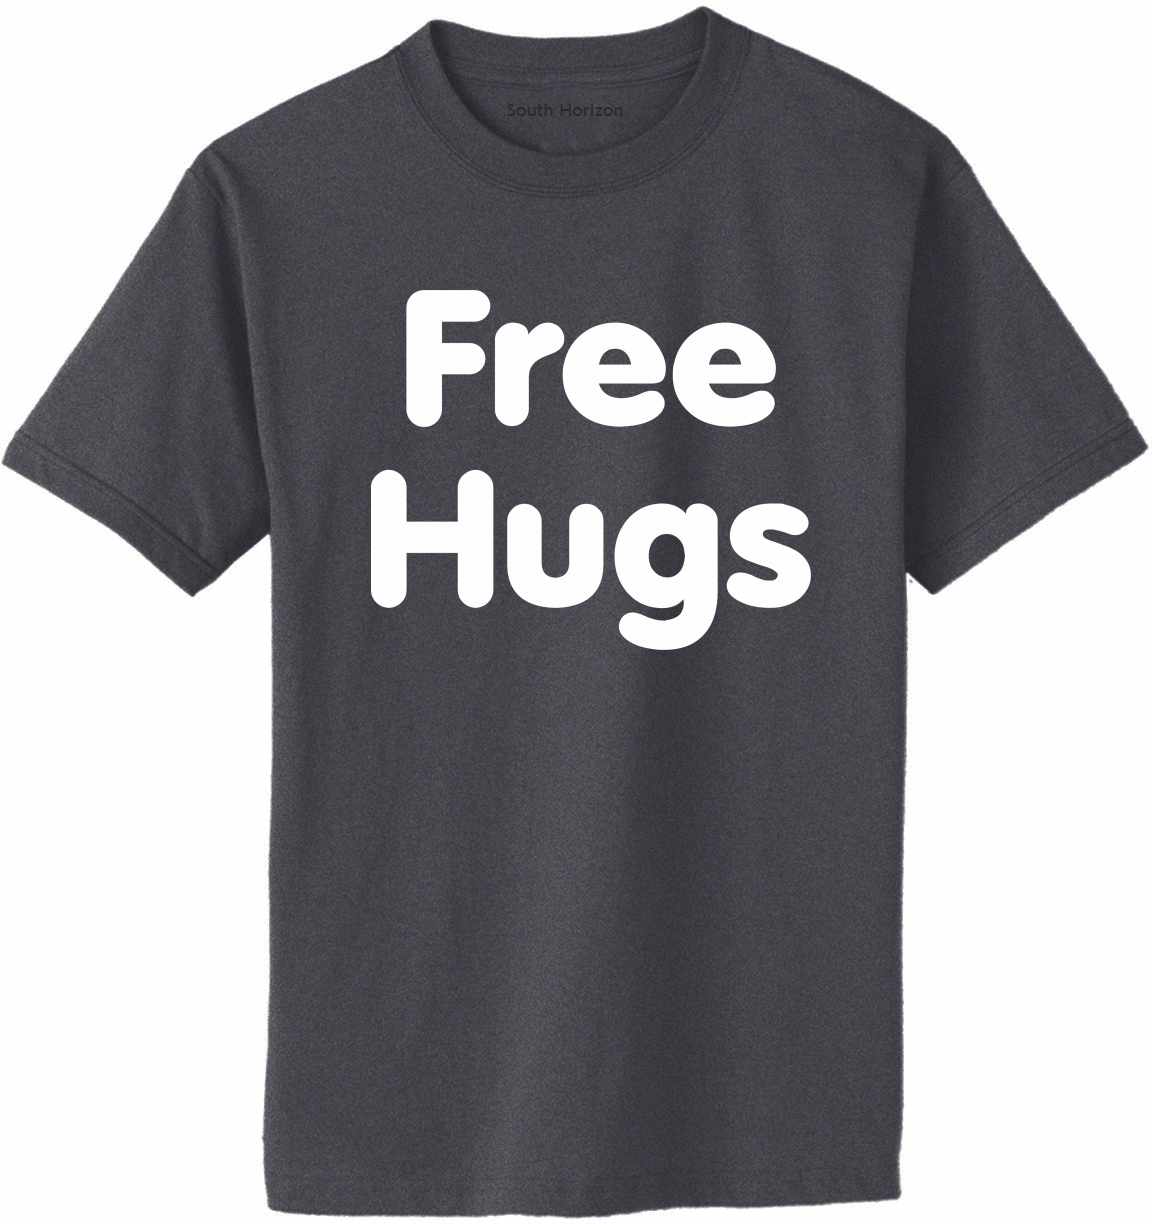 FREE HUGS Adult T-Shirt (#572-1)